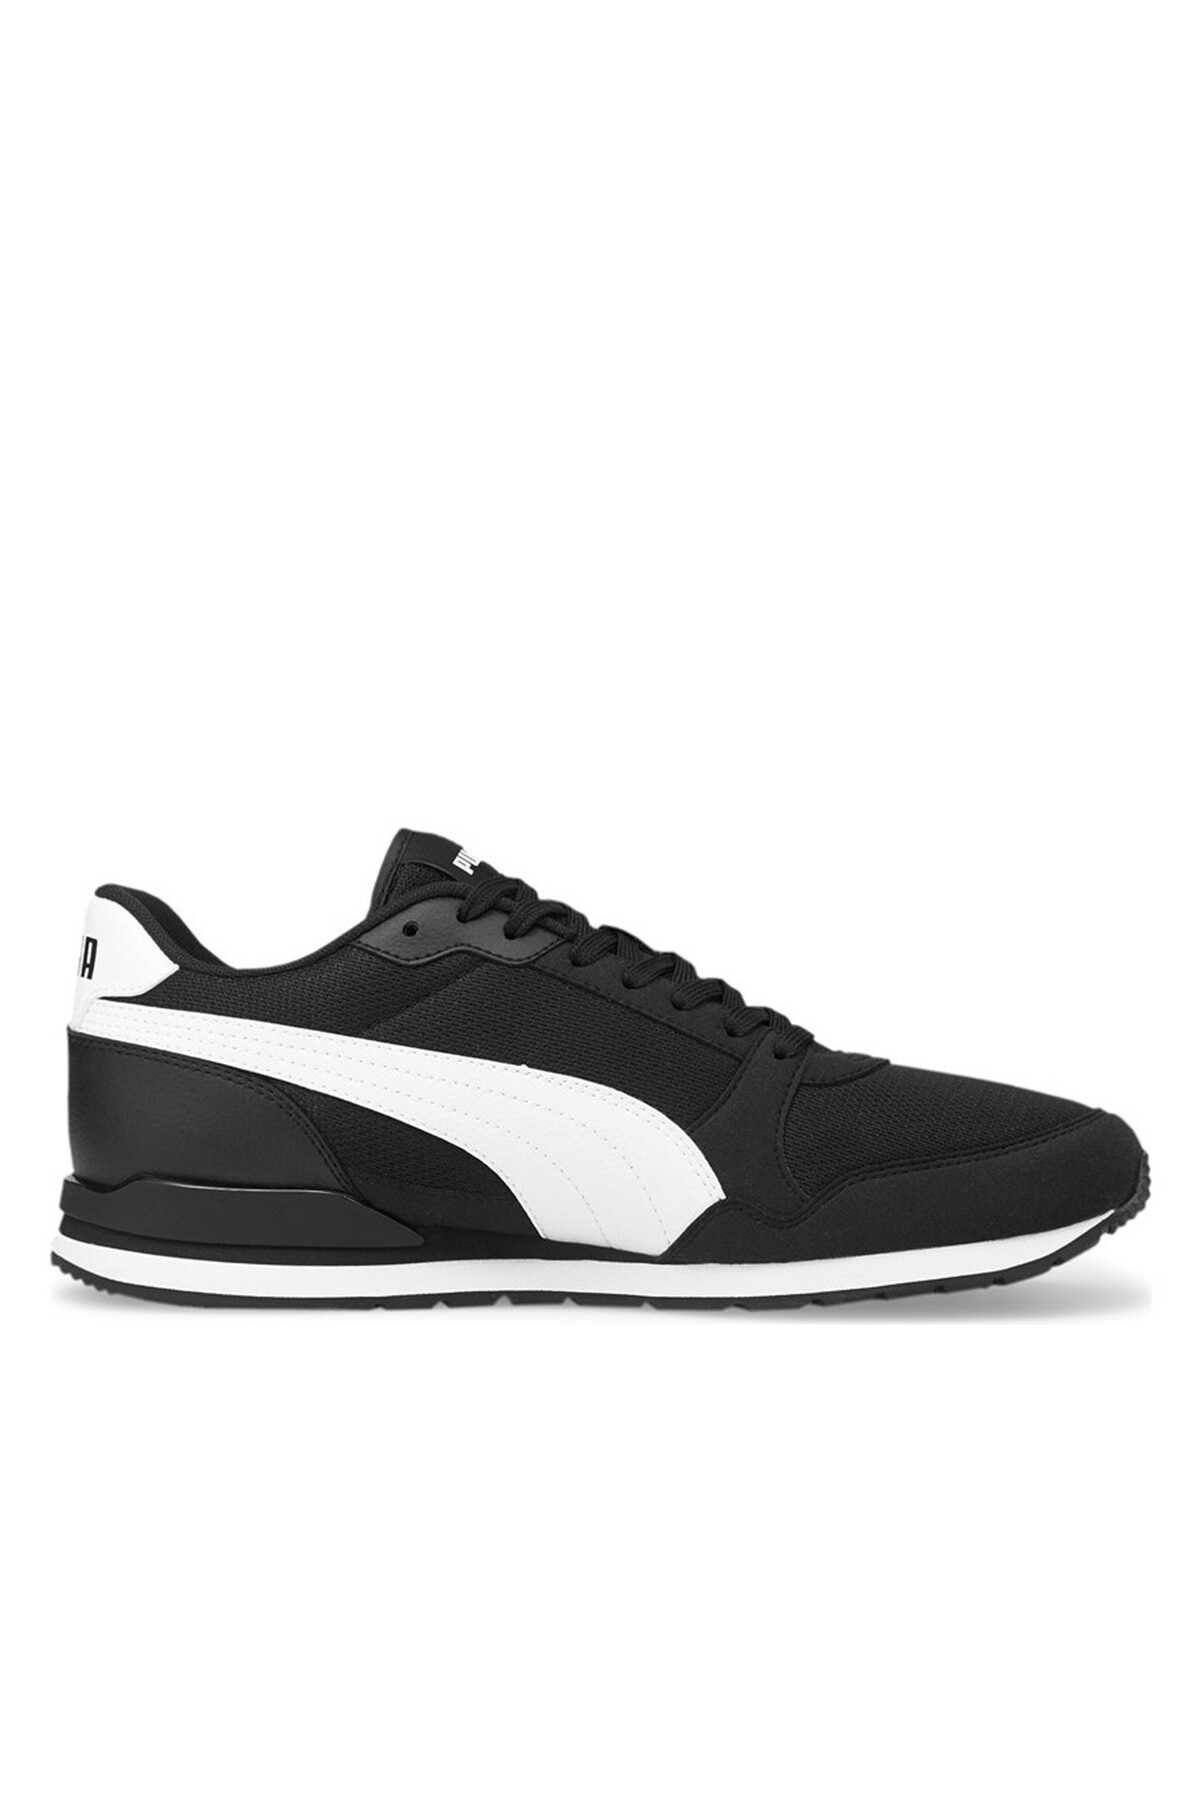 Puma - Puma ST Runner v3 Mesh Unisex Sneaker Ayakkabı Siyah